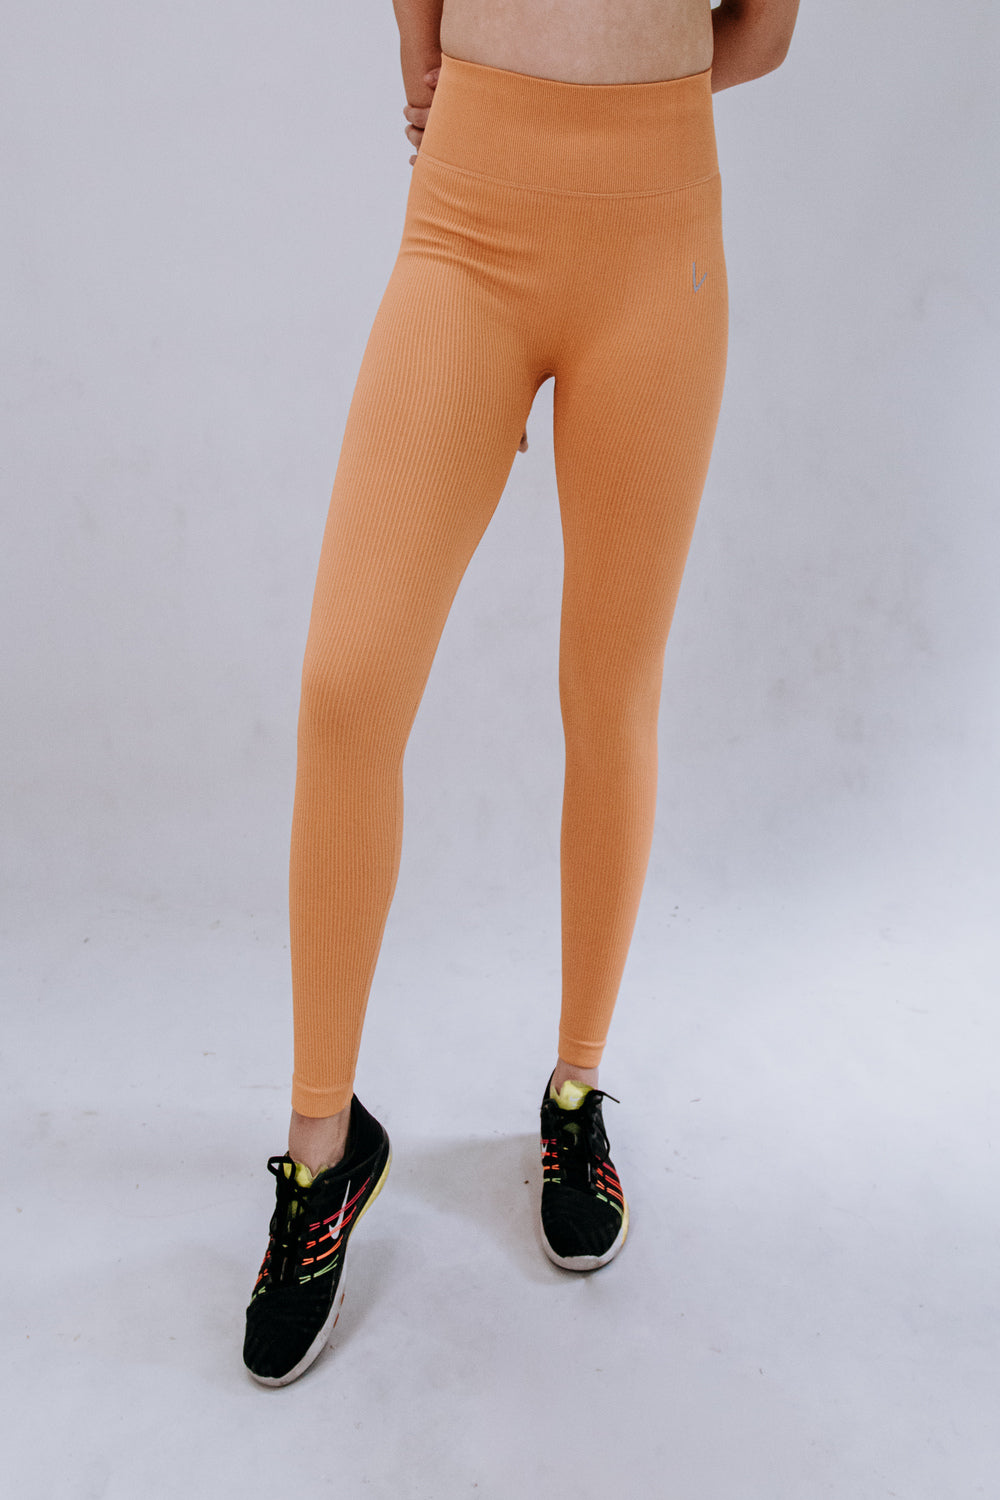 Isadora Paccini Athletic Gym Black Yoga Pants X-Thick Leggings Queen  210-250lbs | eBay